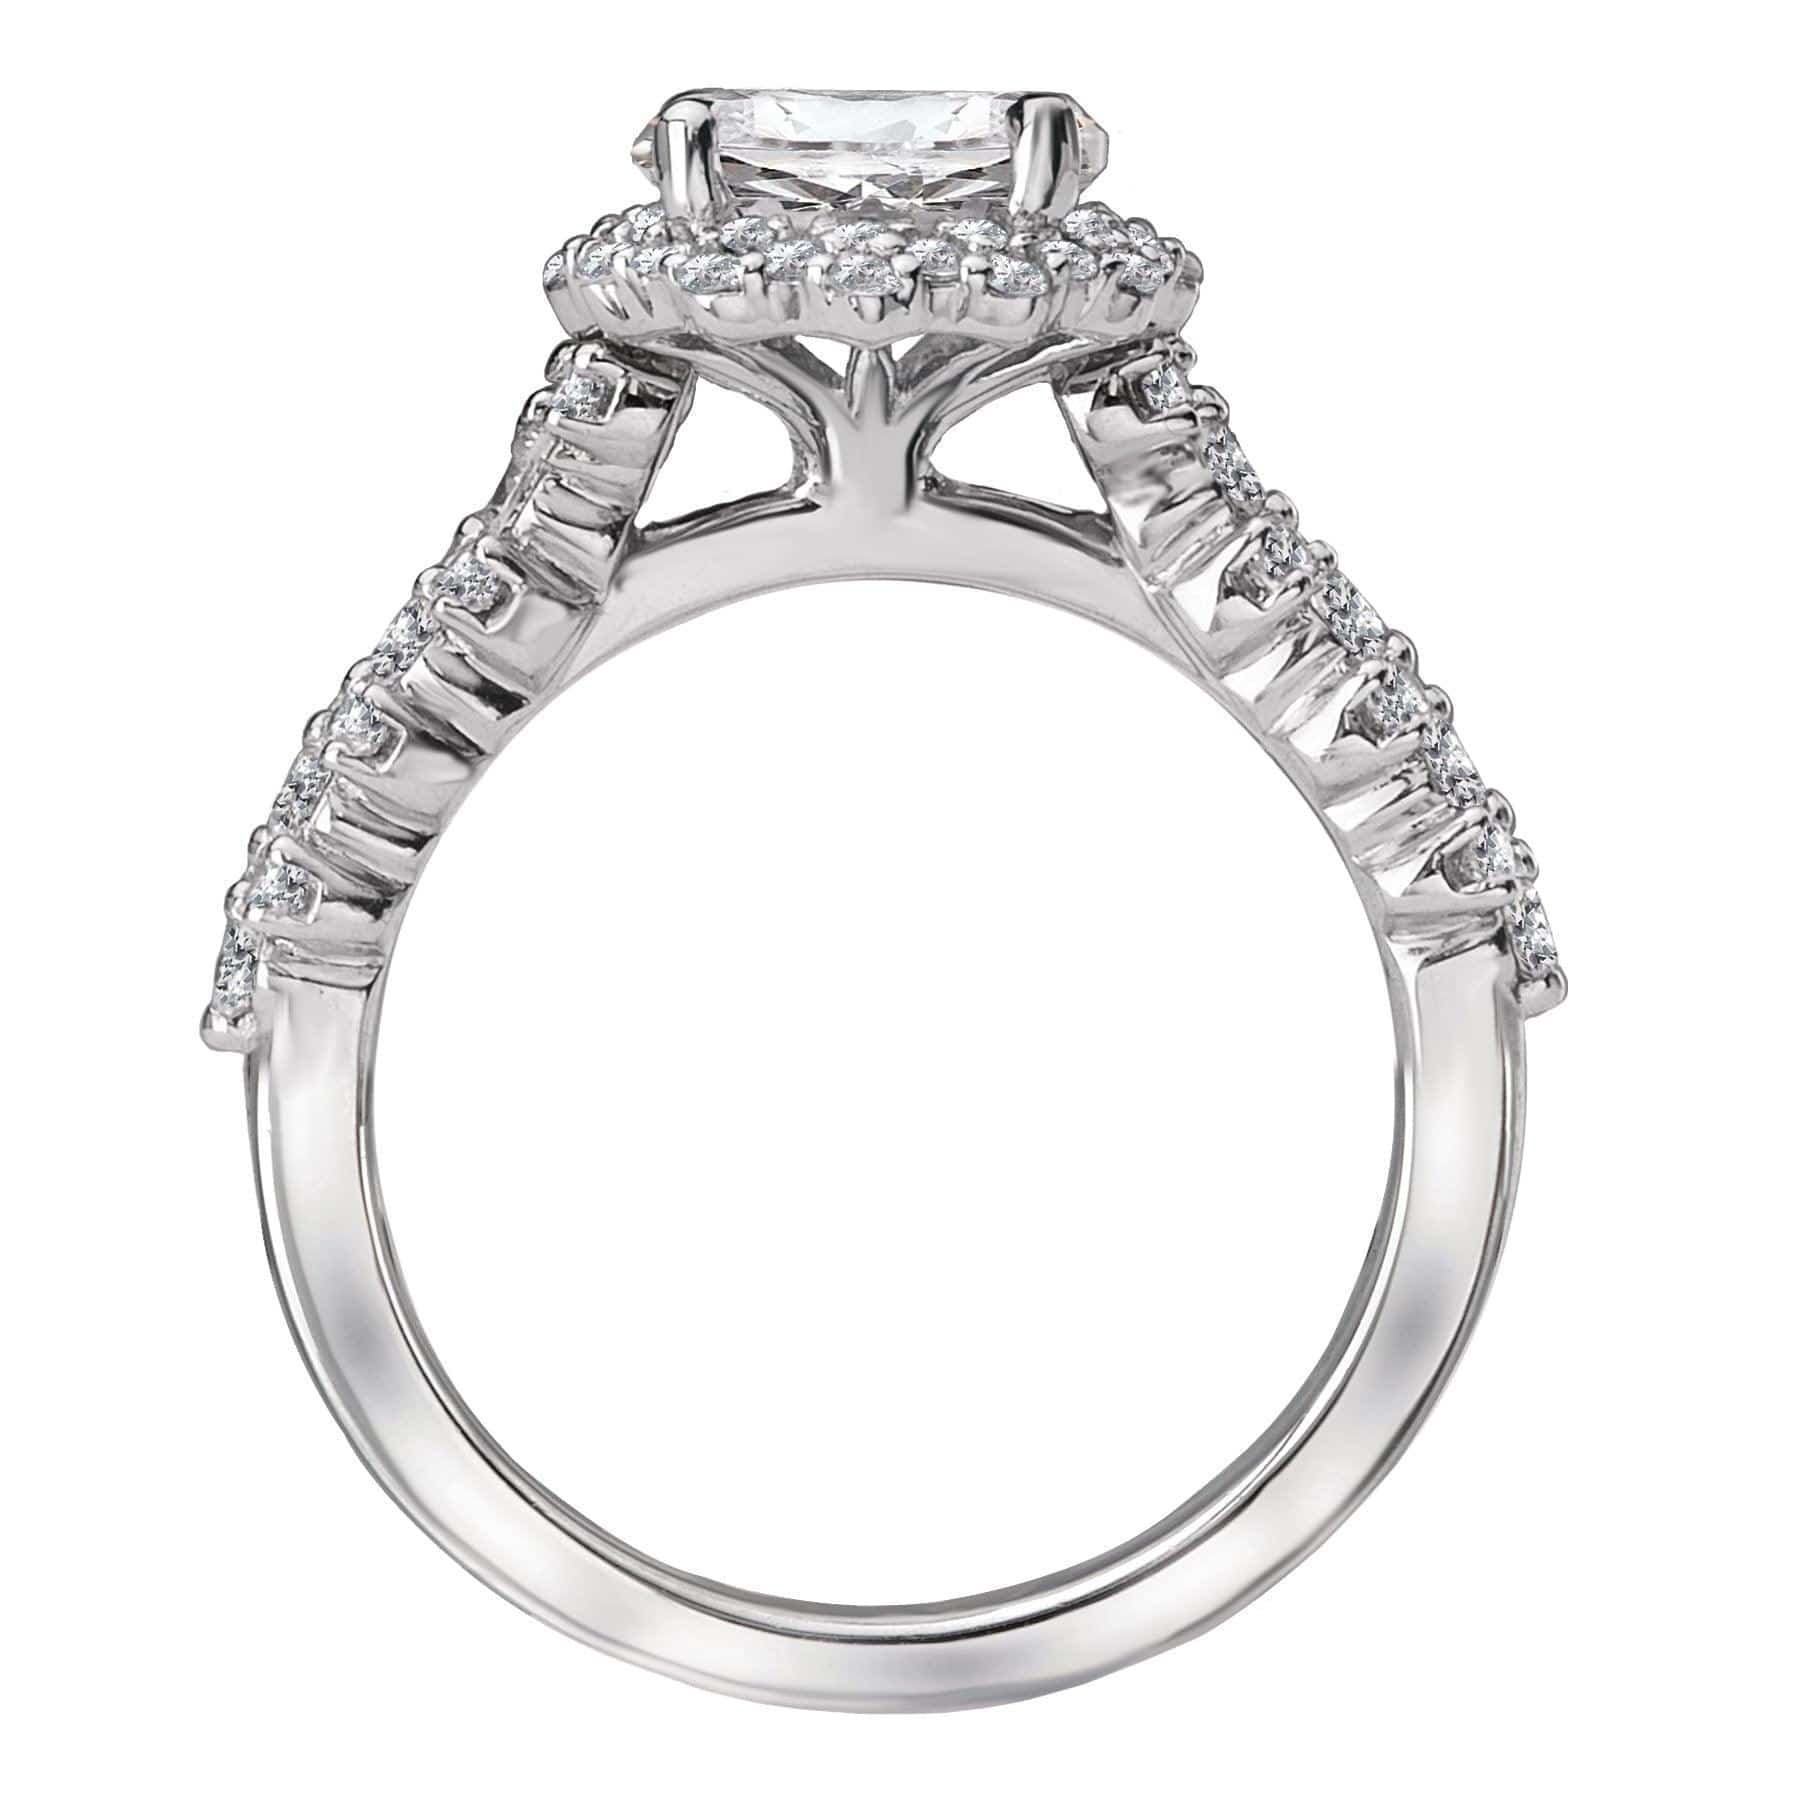 BW JAMES Engagement Rings " The Vegas" Halo Semi-Mount Diamond Ring